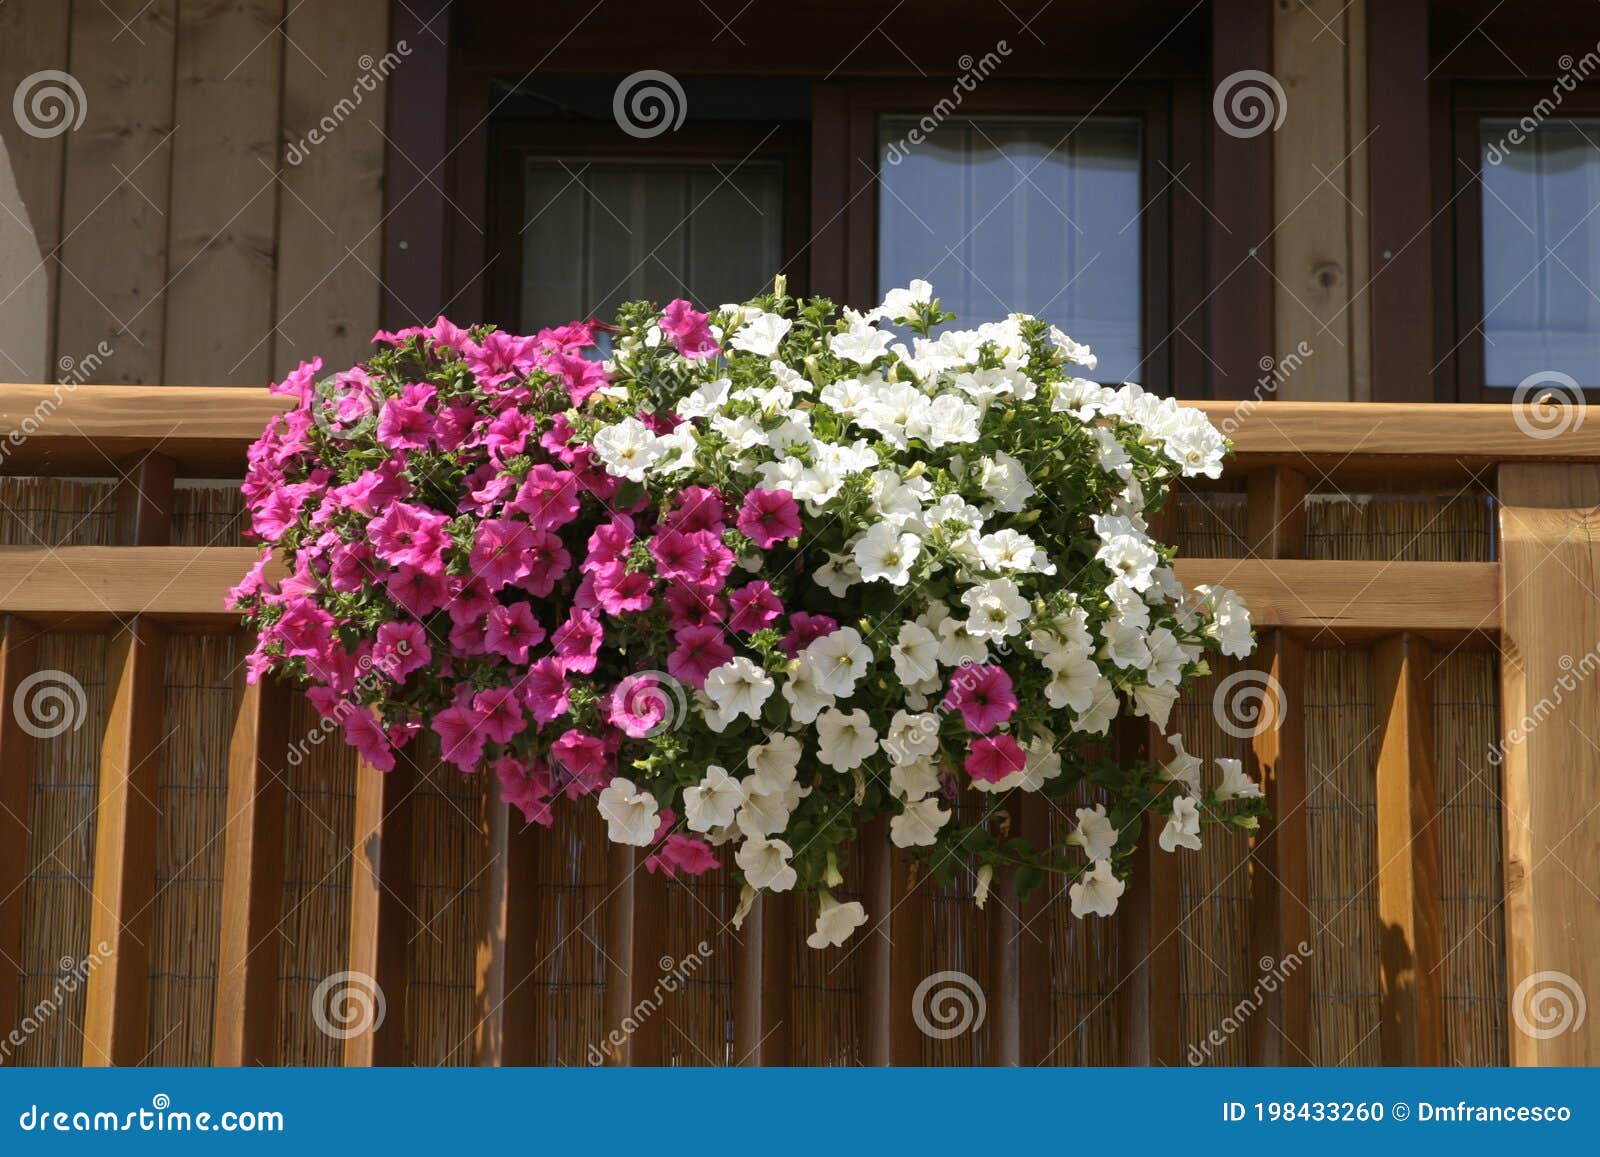 flowers in the balcony